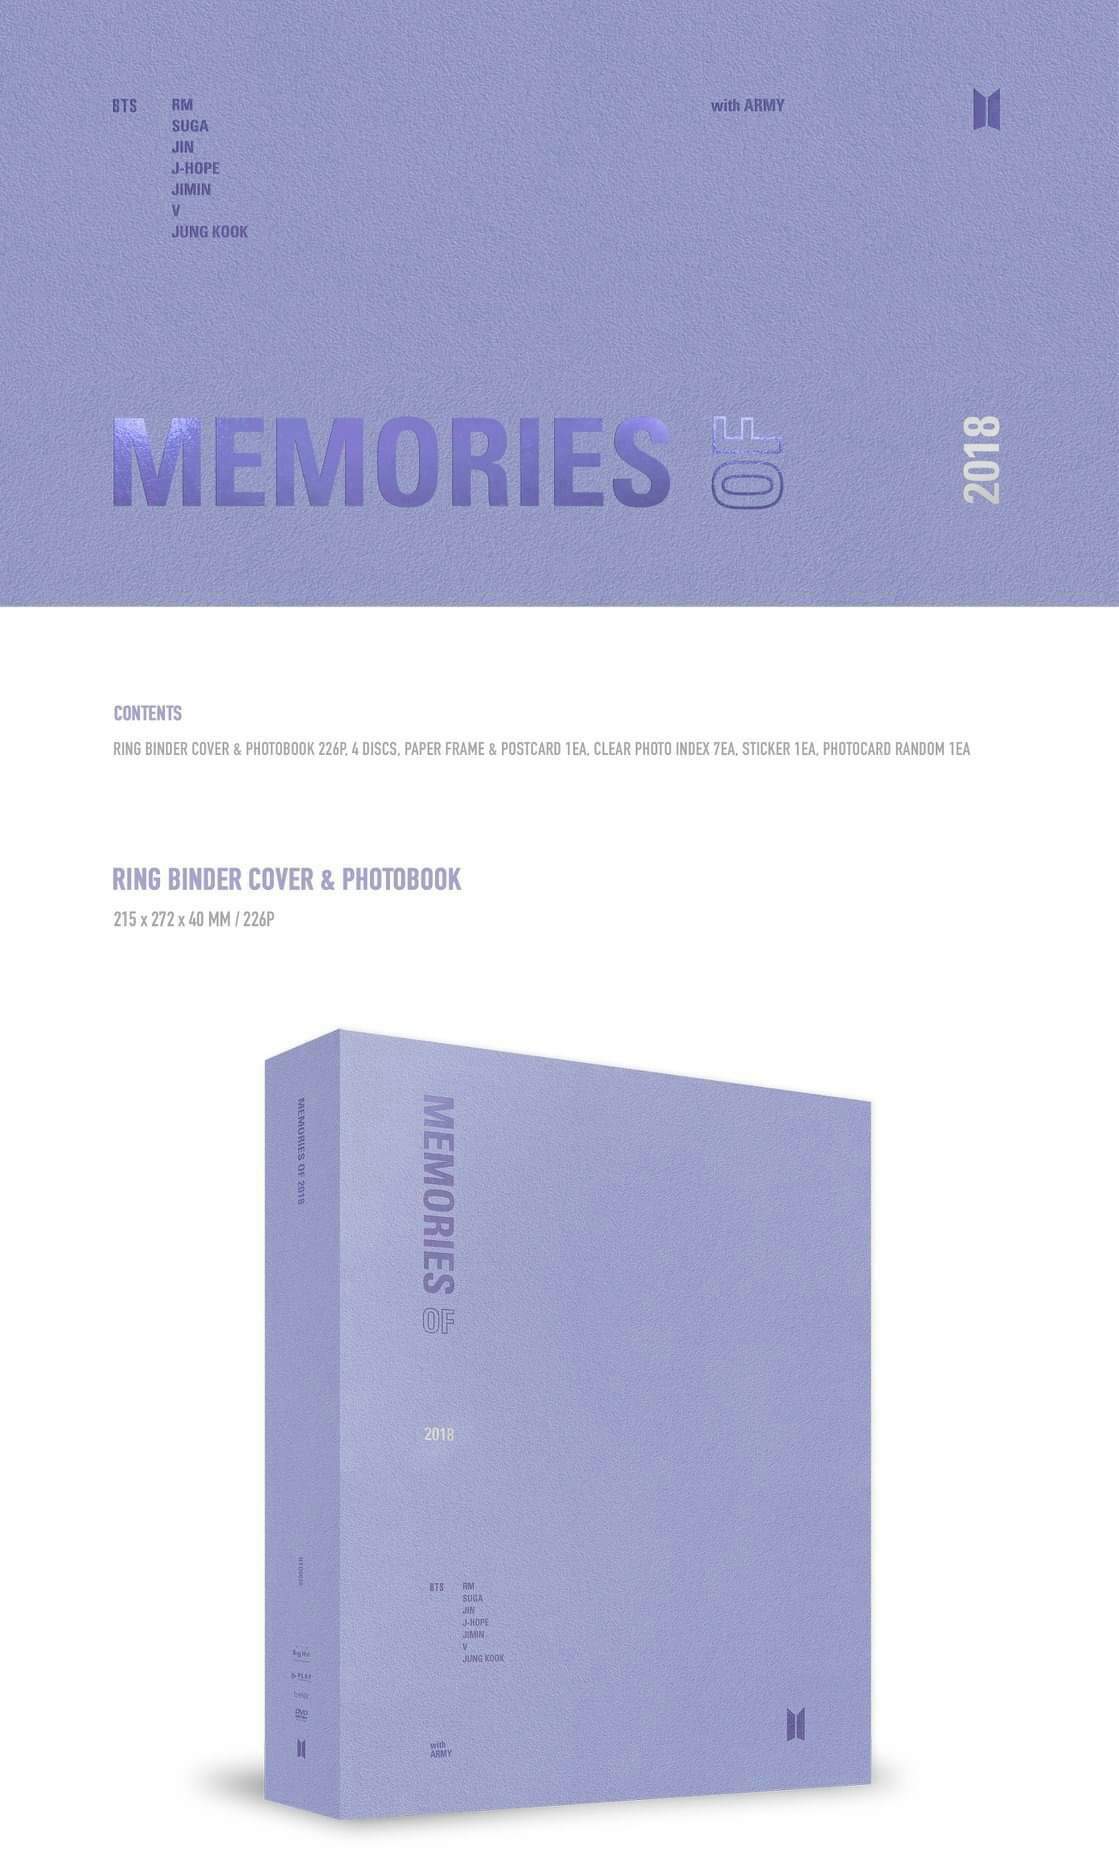 BTS MEMORIES OF 2018 DVD | •BTS|SUGA• Amino